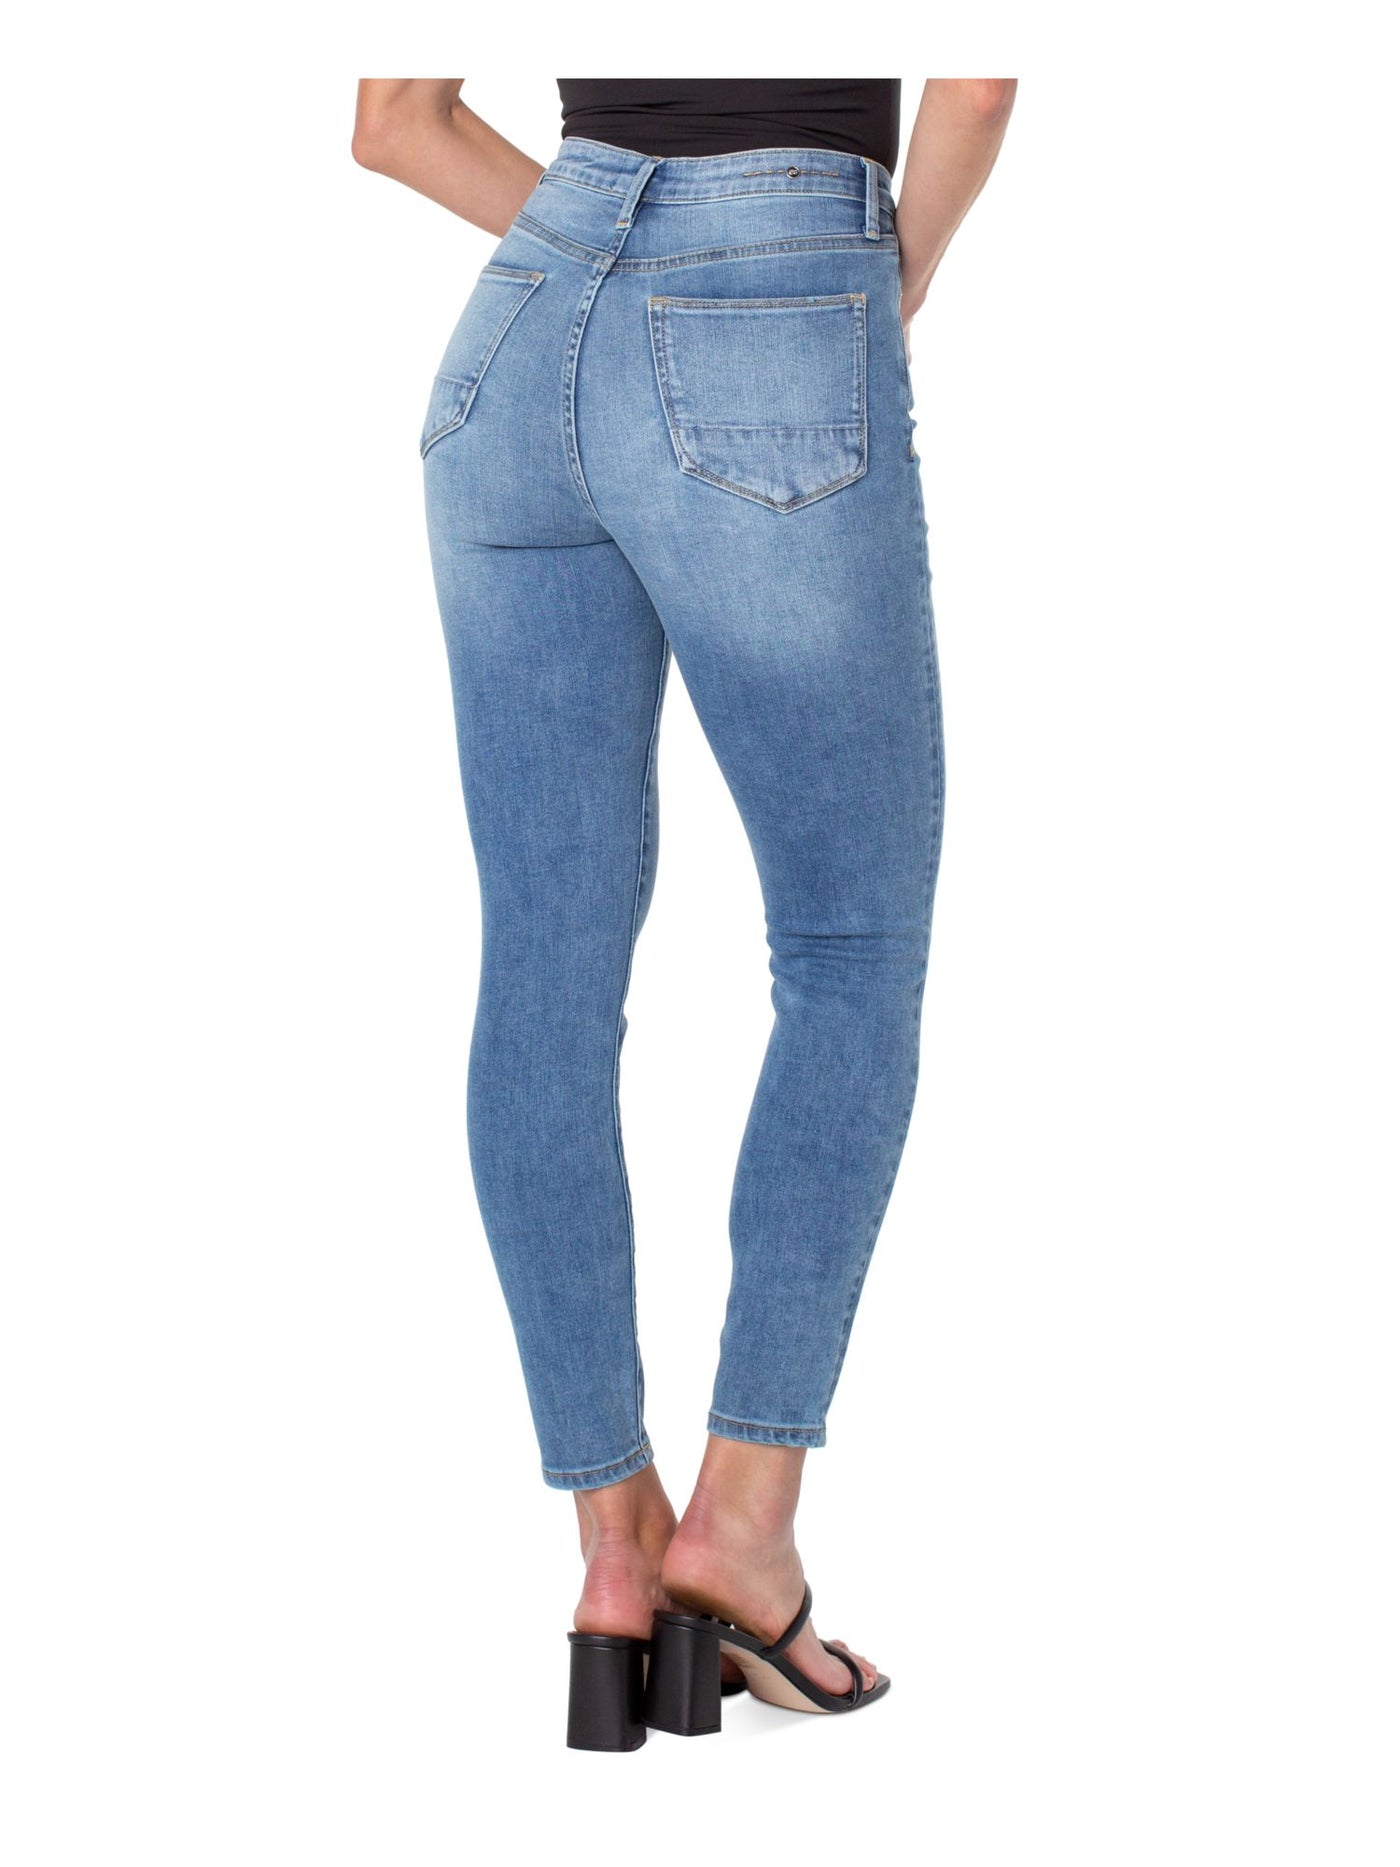 EARNEST SEWN NEW YORK Womens Blue Zippered Pocketed Skinny High Waist Jeans Juniors 33